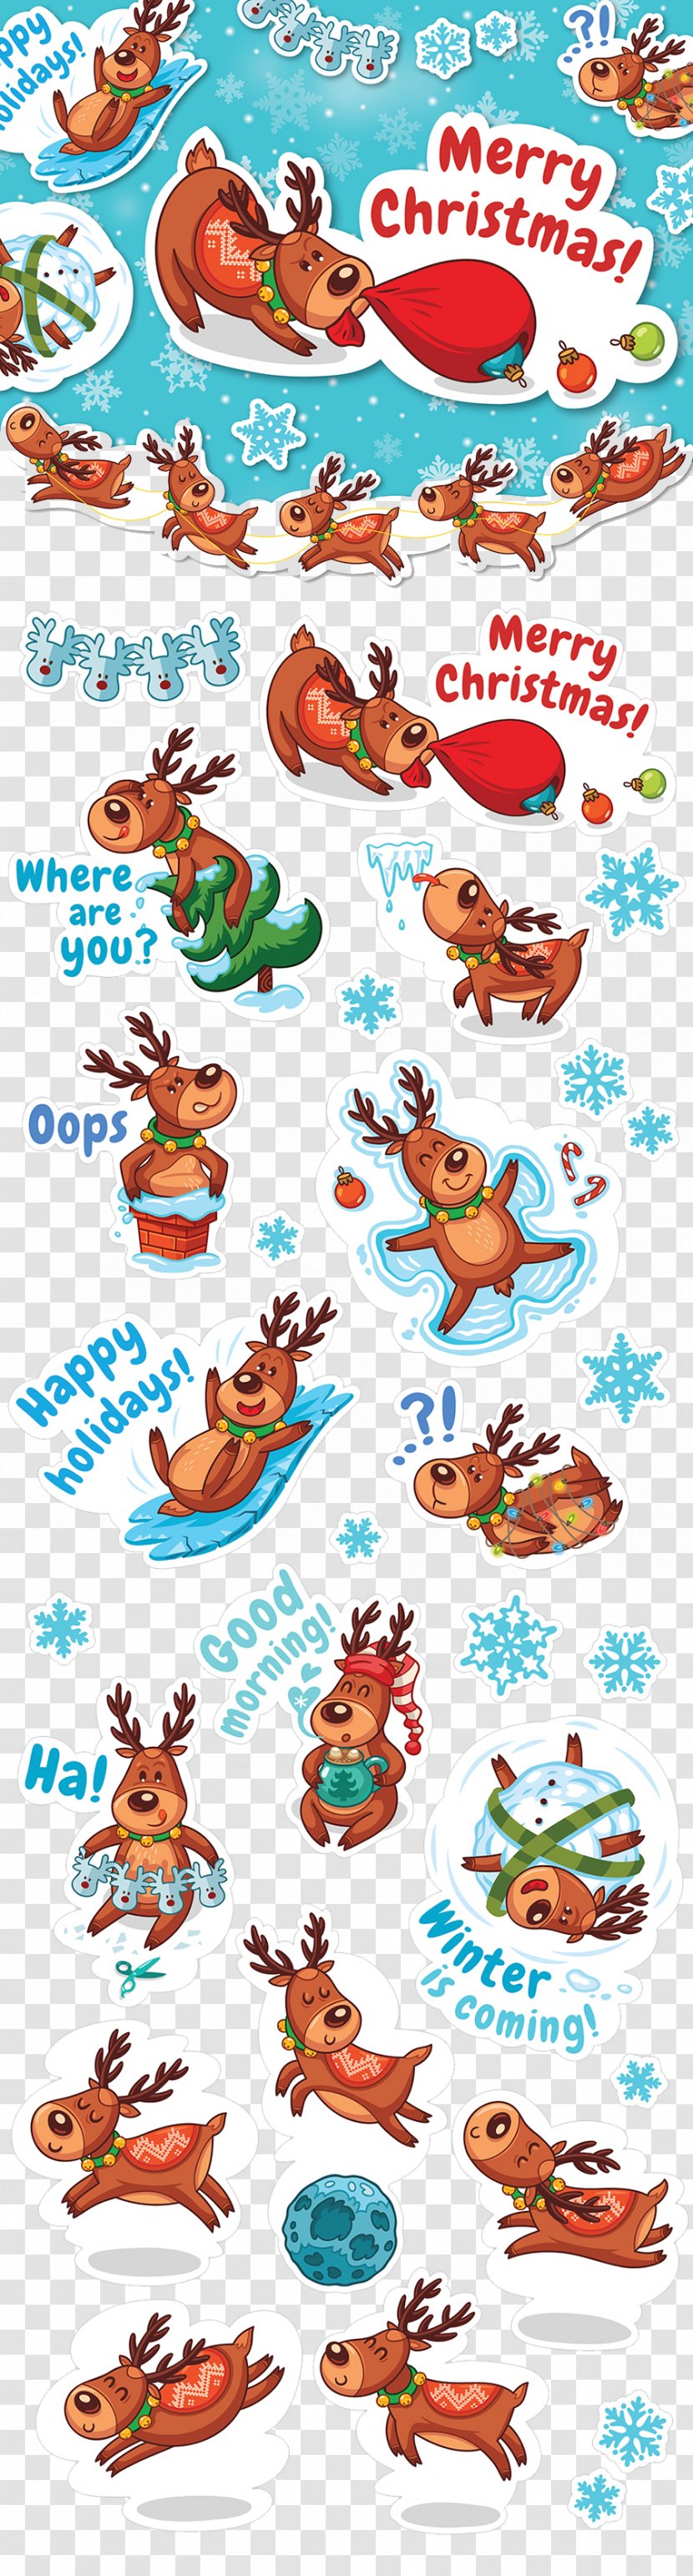 Reindeer Santa Claus Christmas Illustration - Water - Cute Posters Transparent PNG